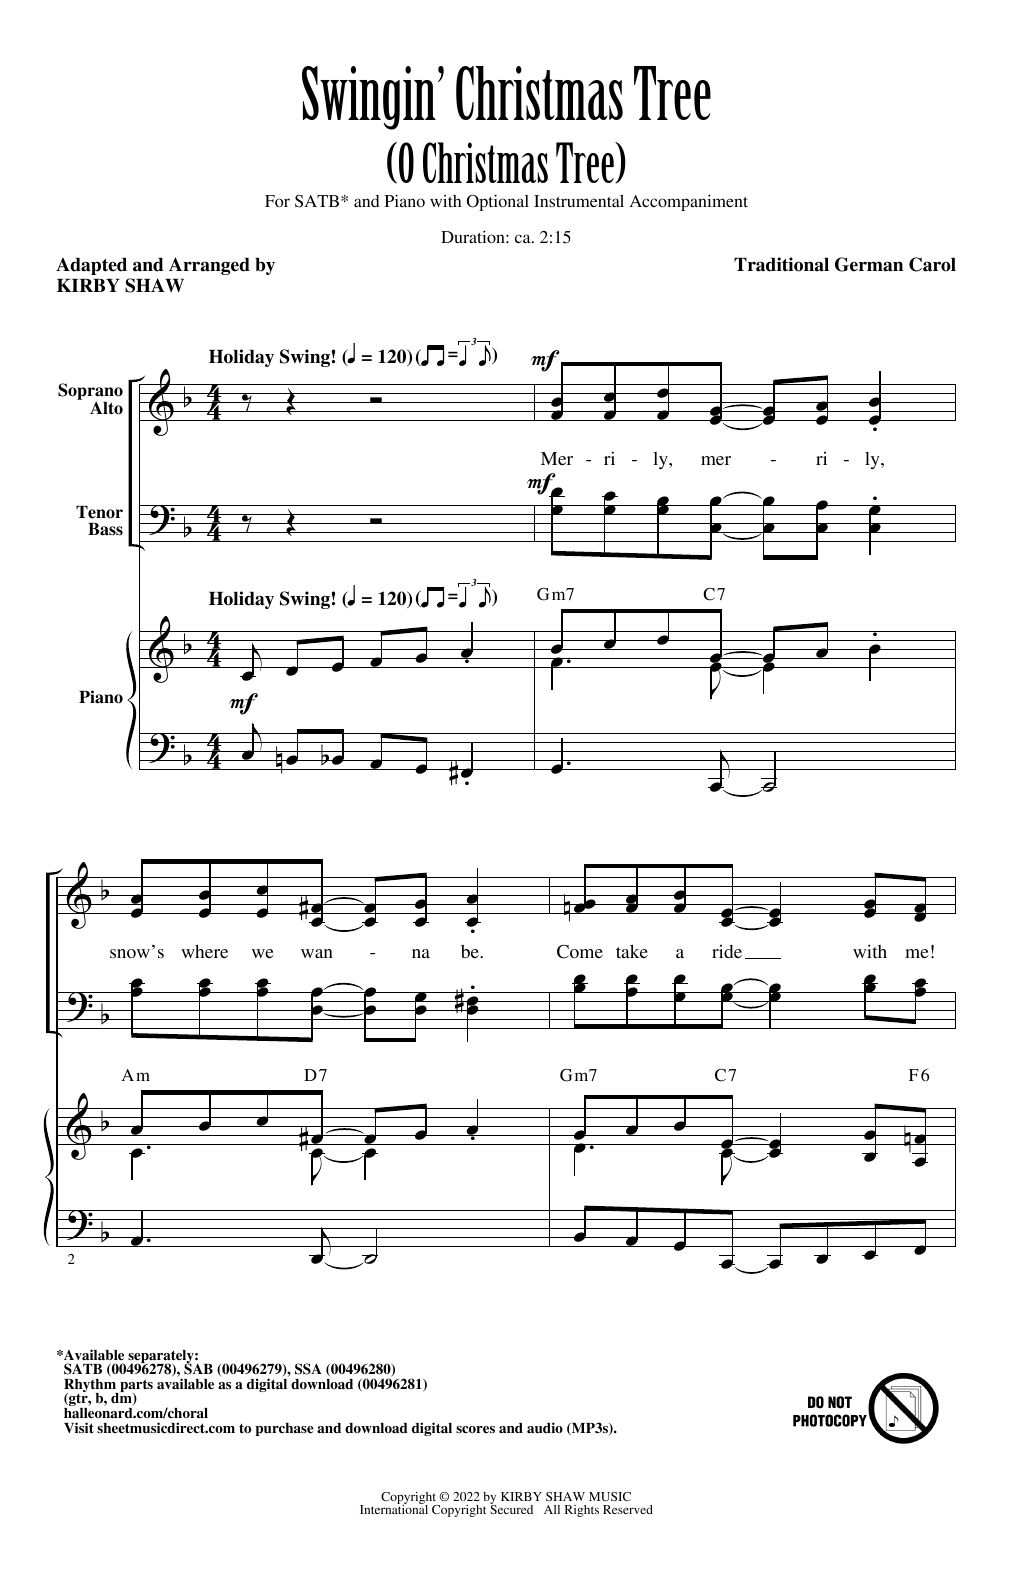 Traditional German Carol Swingin' Christmas Tree (O Christmas Tree) (arr. Kirby Shaw) sheet music notes and chords arranged for SSA Choir